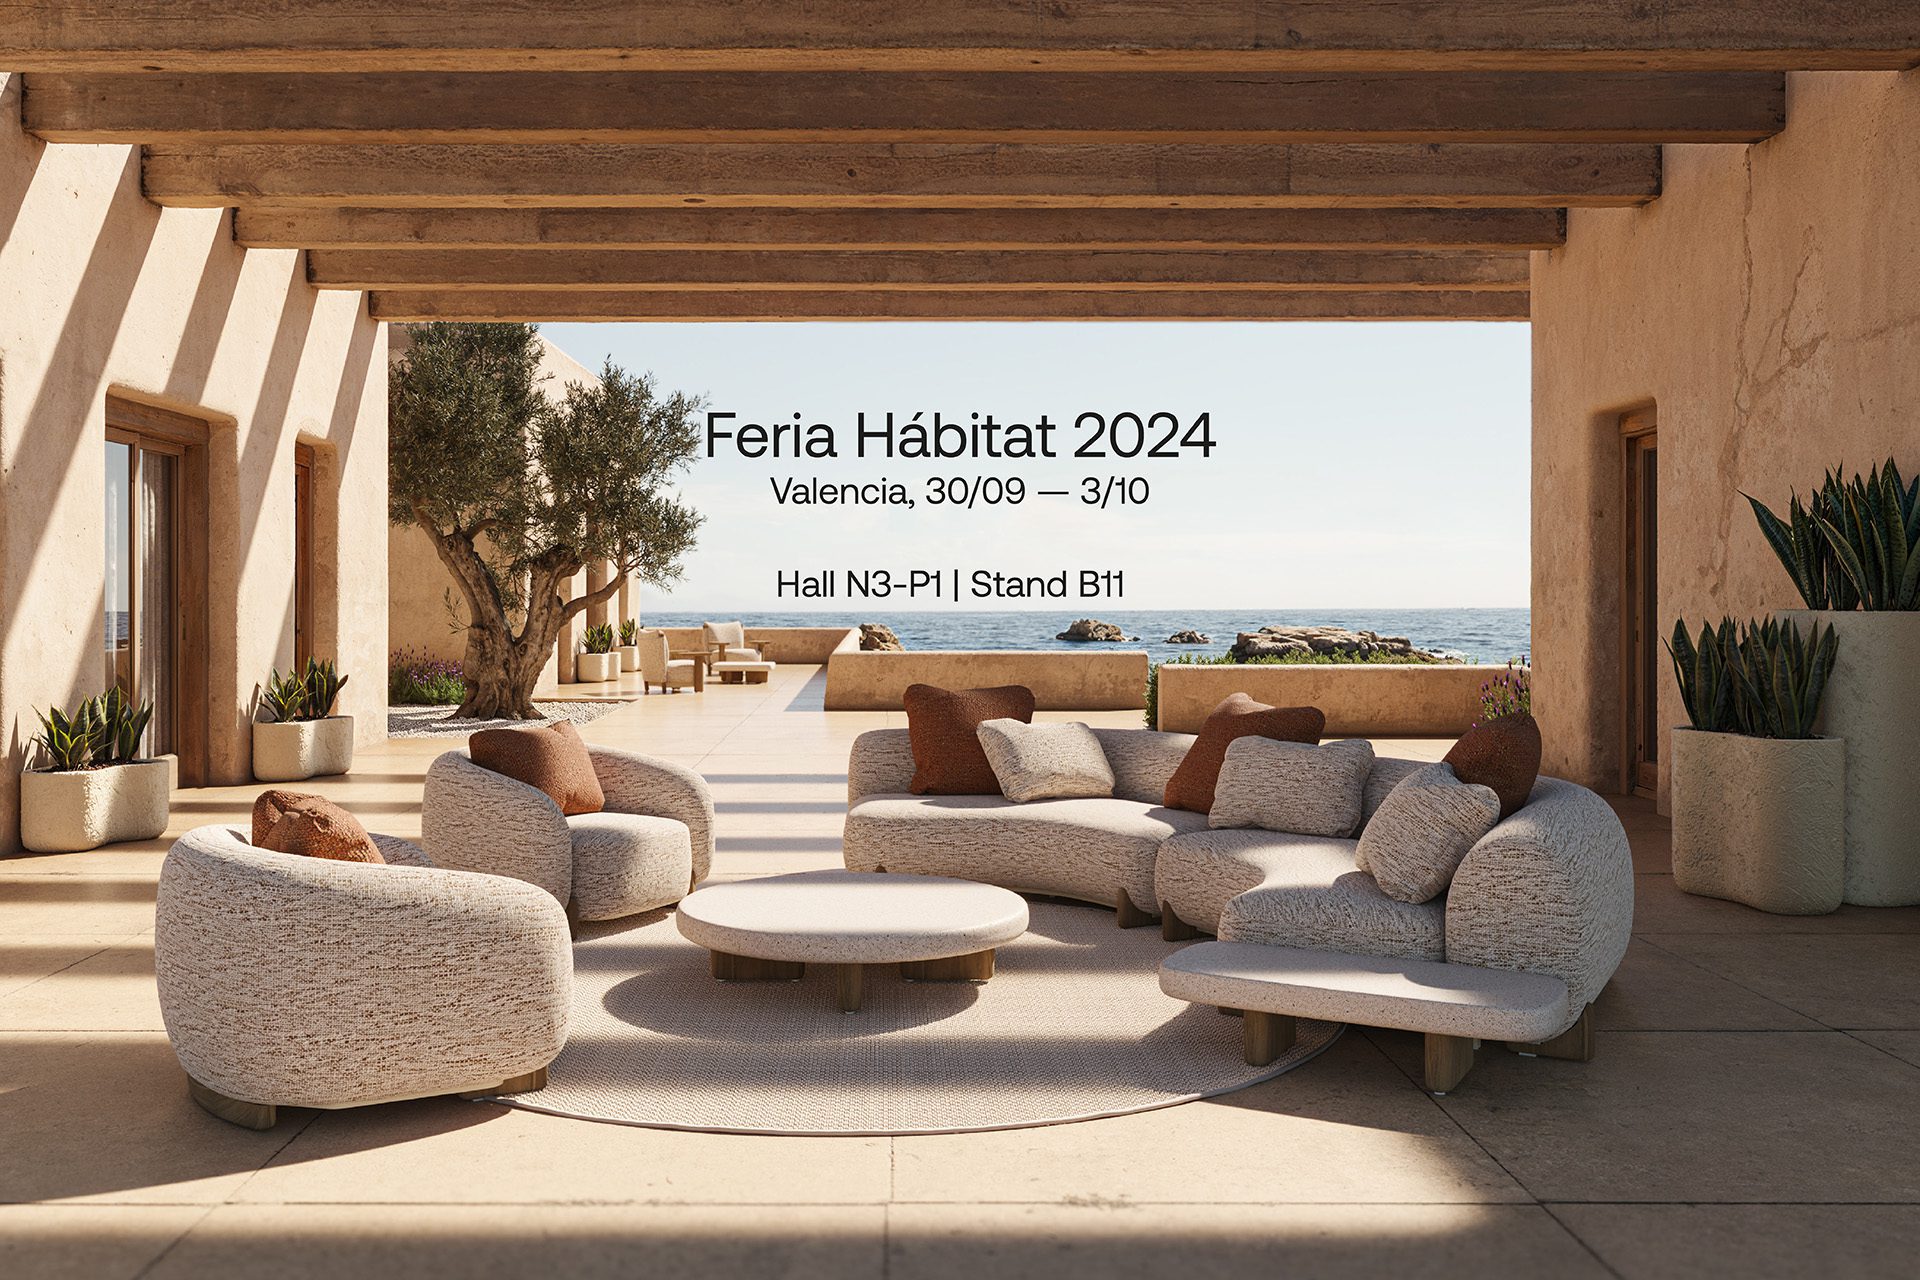 Feria Hábitat 2024, a new chapter in outdoor design